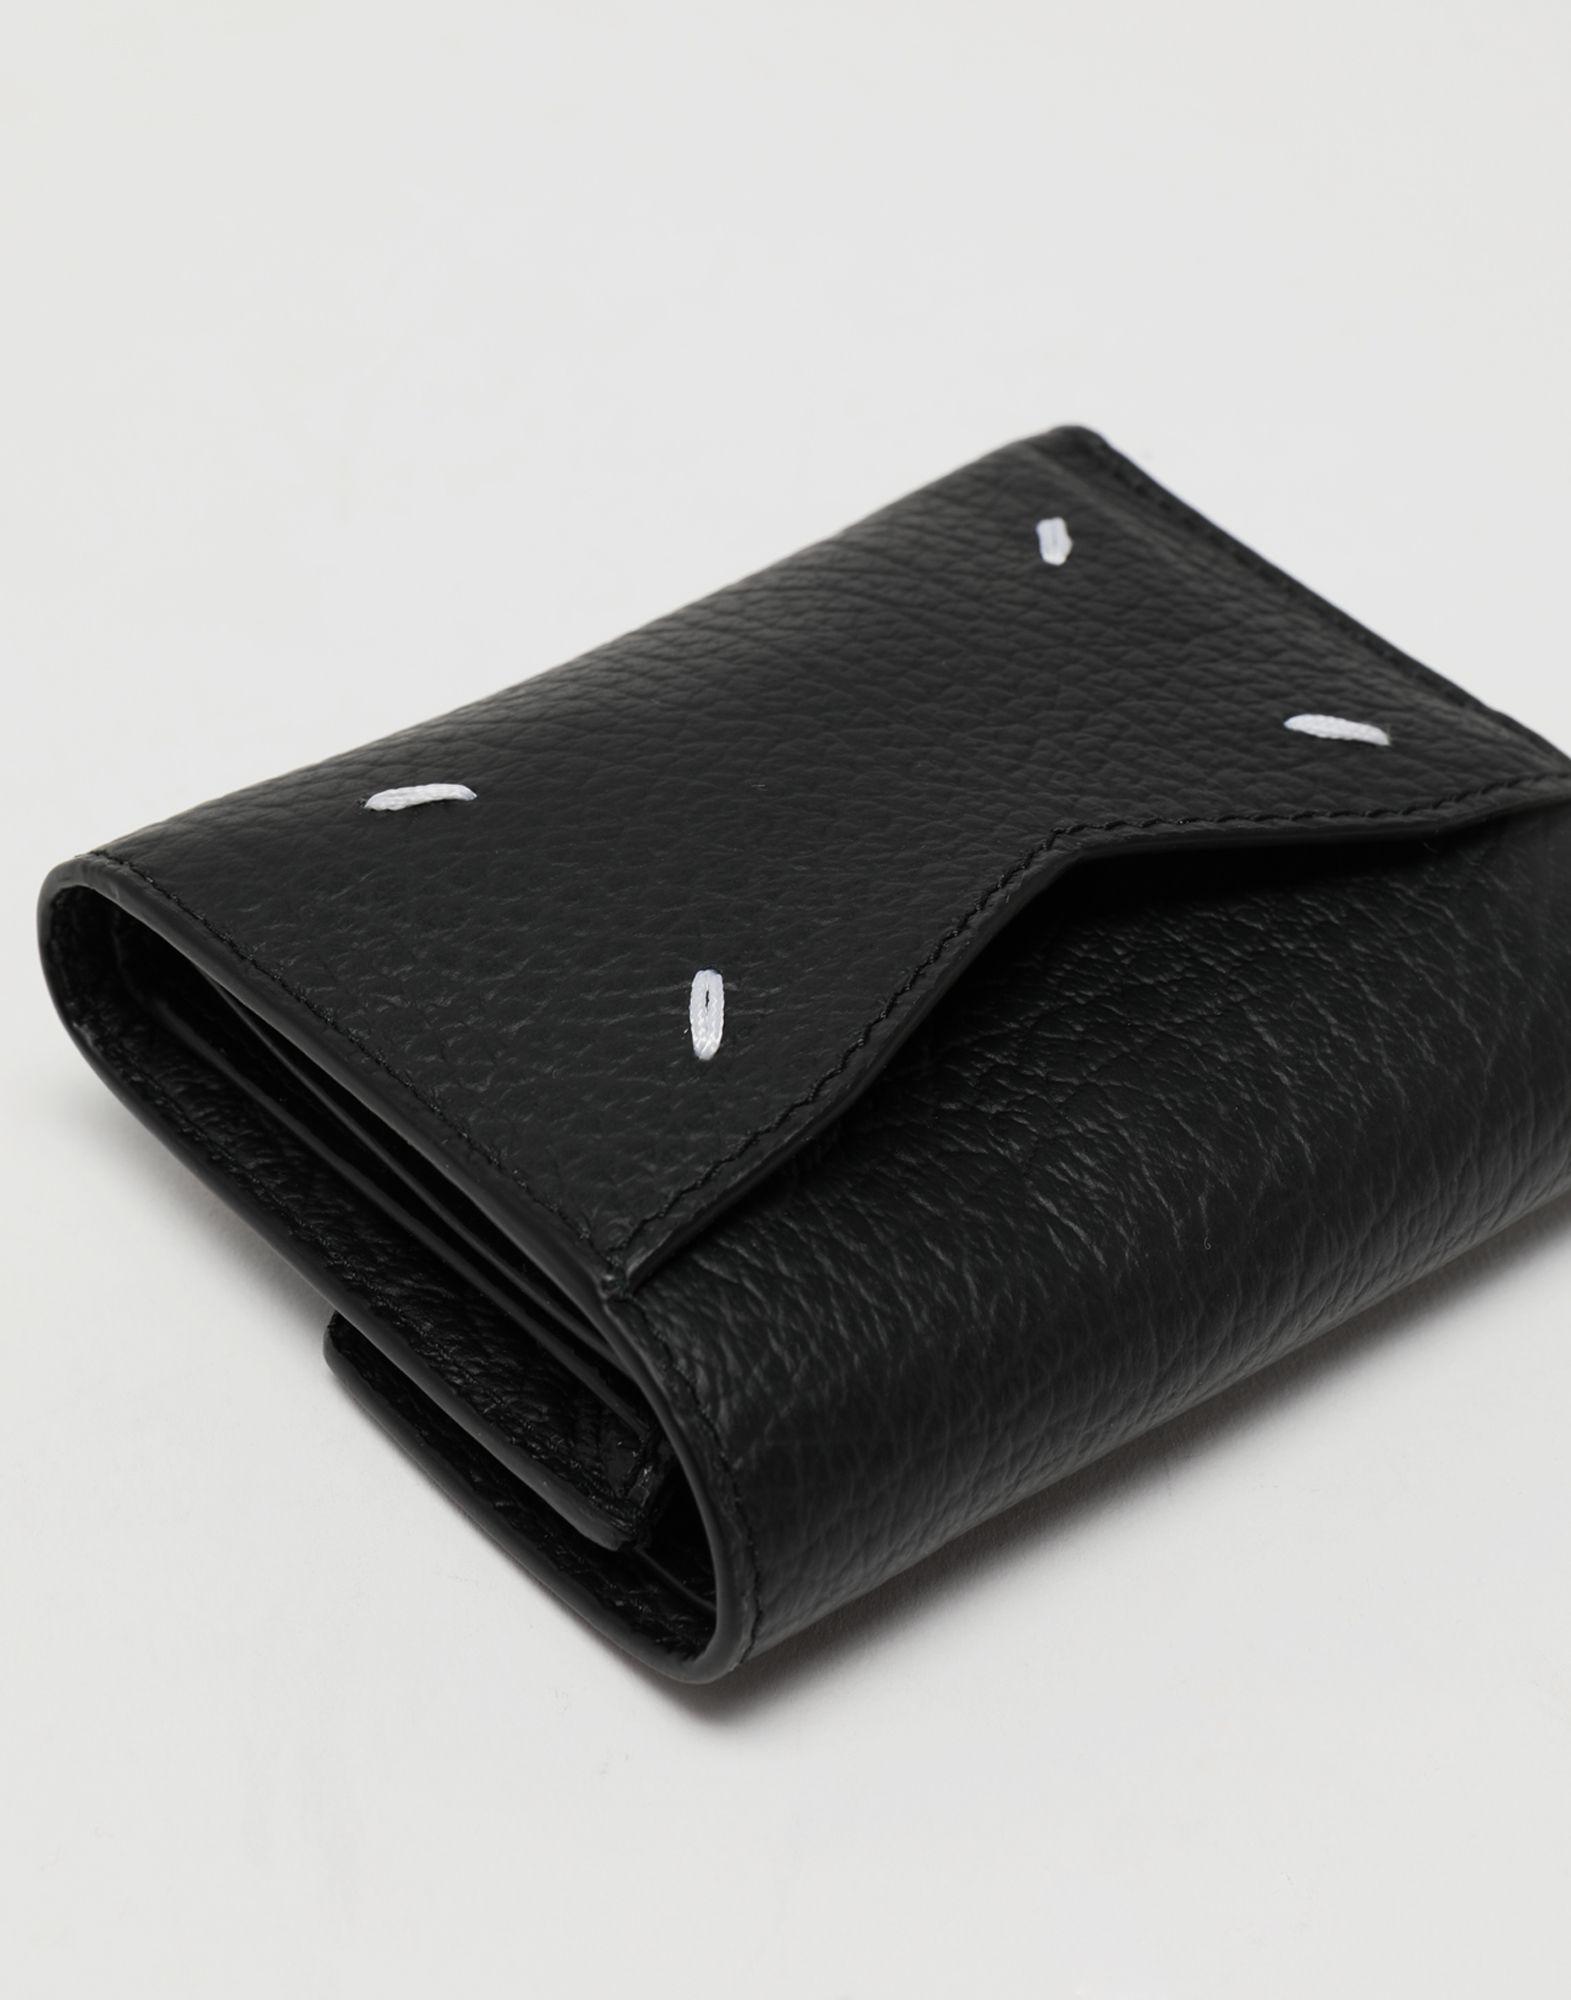 Maison Margiela Envelope Leather Wallet in Black - Lyst